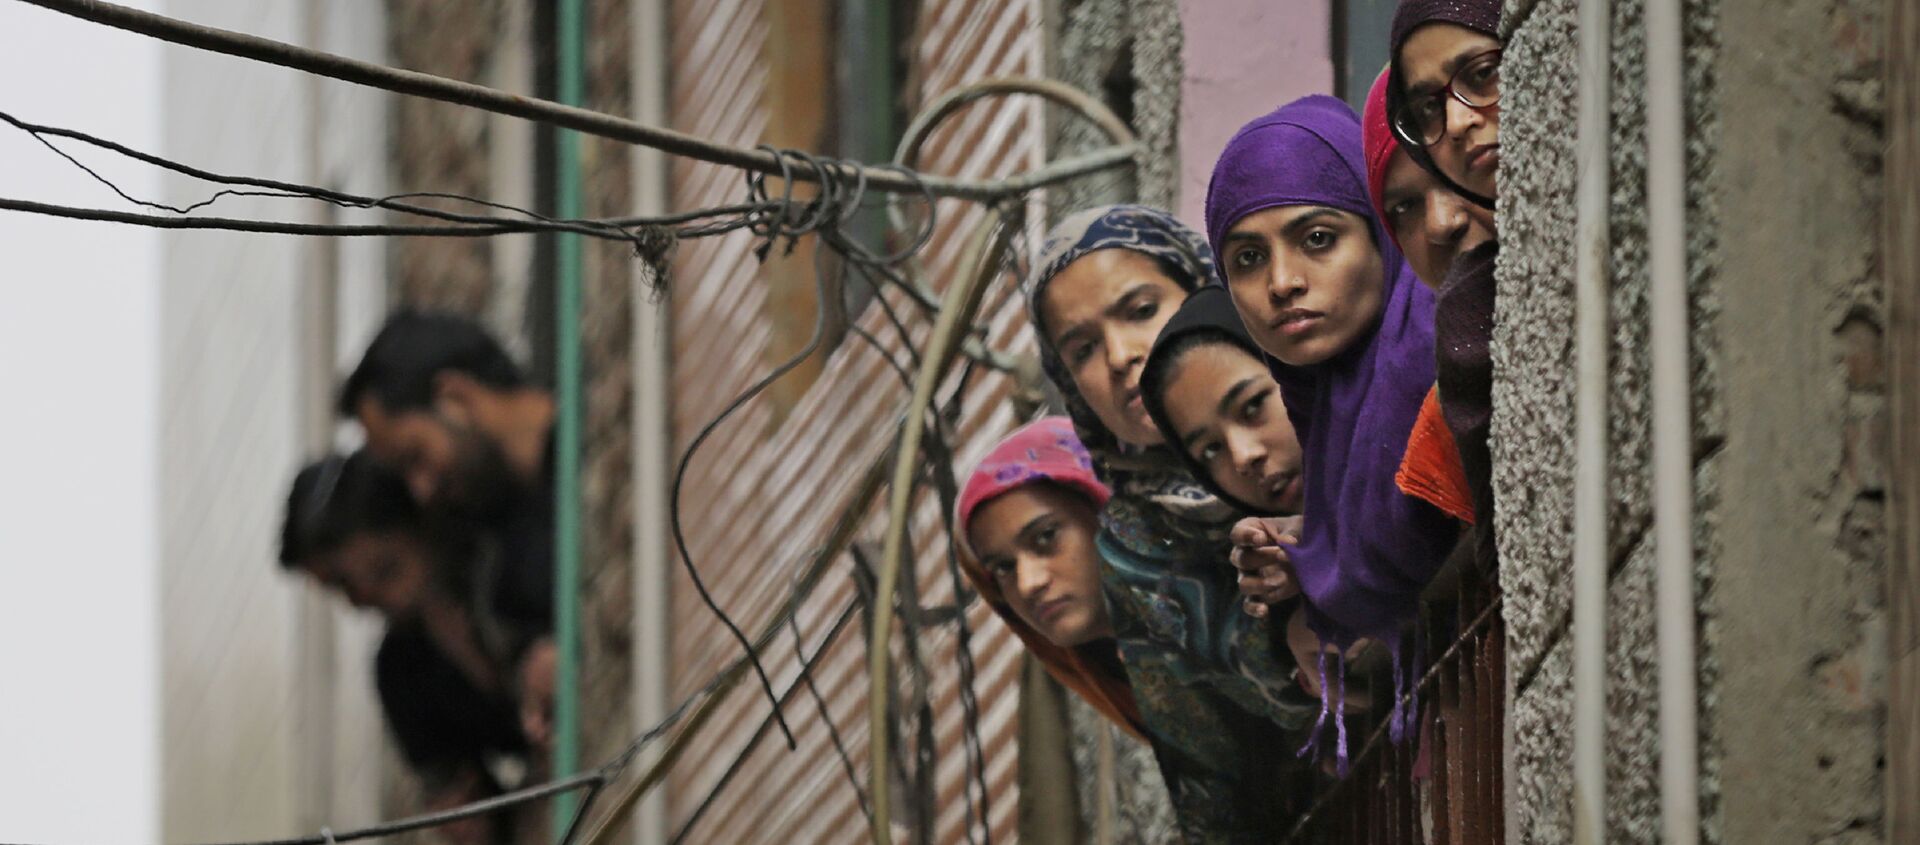 Indian Muslim women look out of a window as security officers patrol a street in New Delhi - Sputnik International, 1920, 02.09.2021